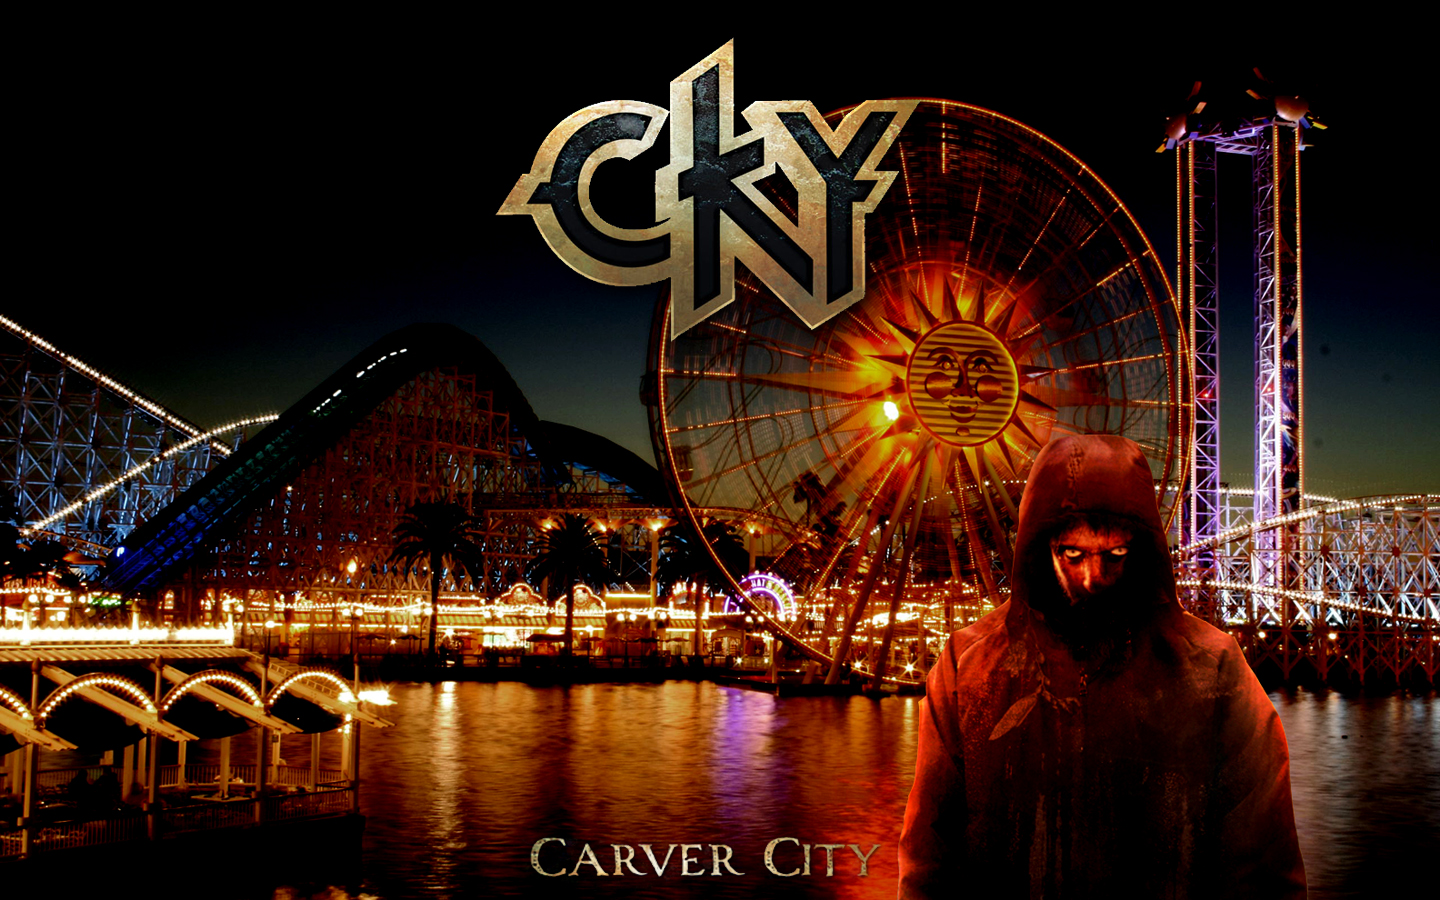 cky carver city by saamhimself2 fan art wallpaper other 2009 2015 1440x900